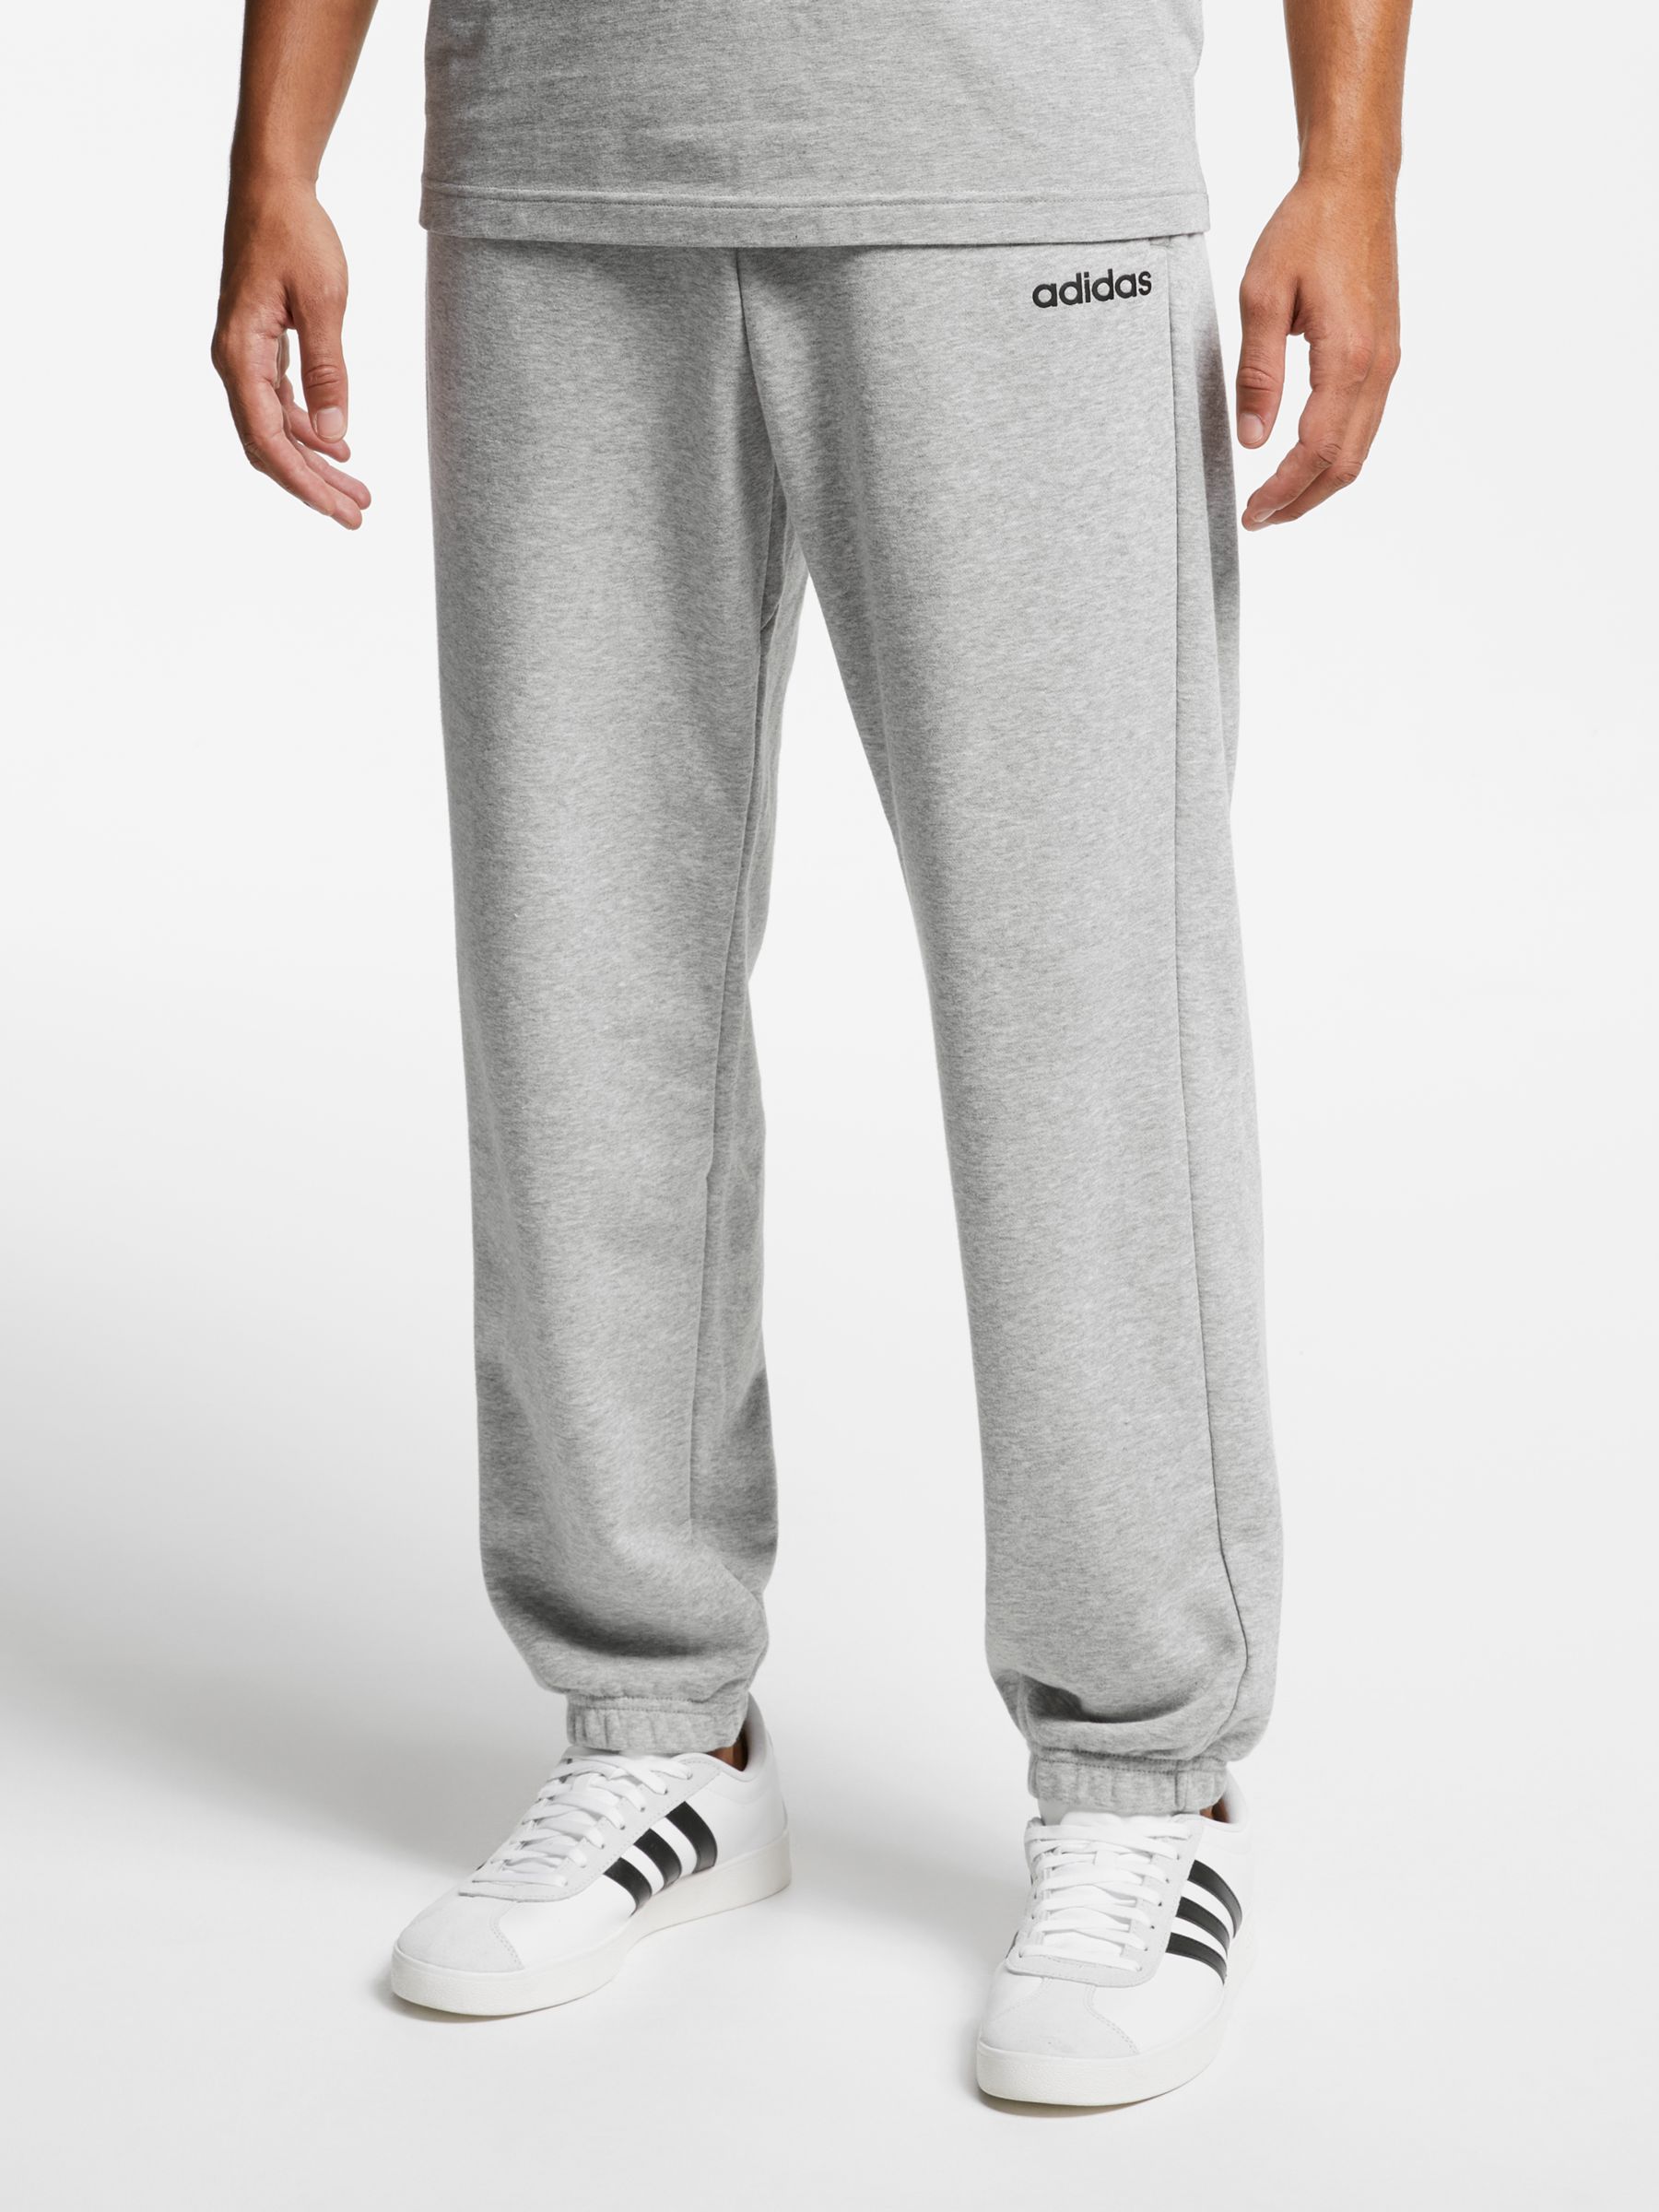 grey adidas jogging bottoms